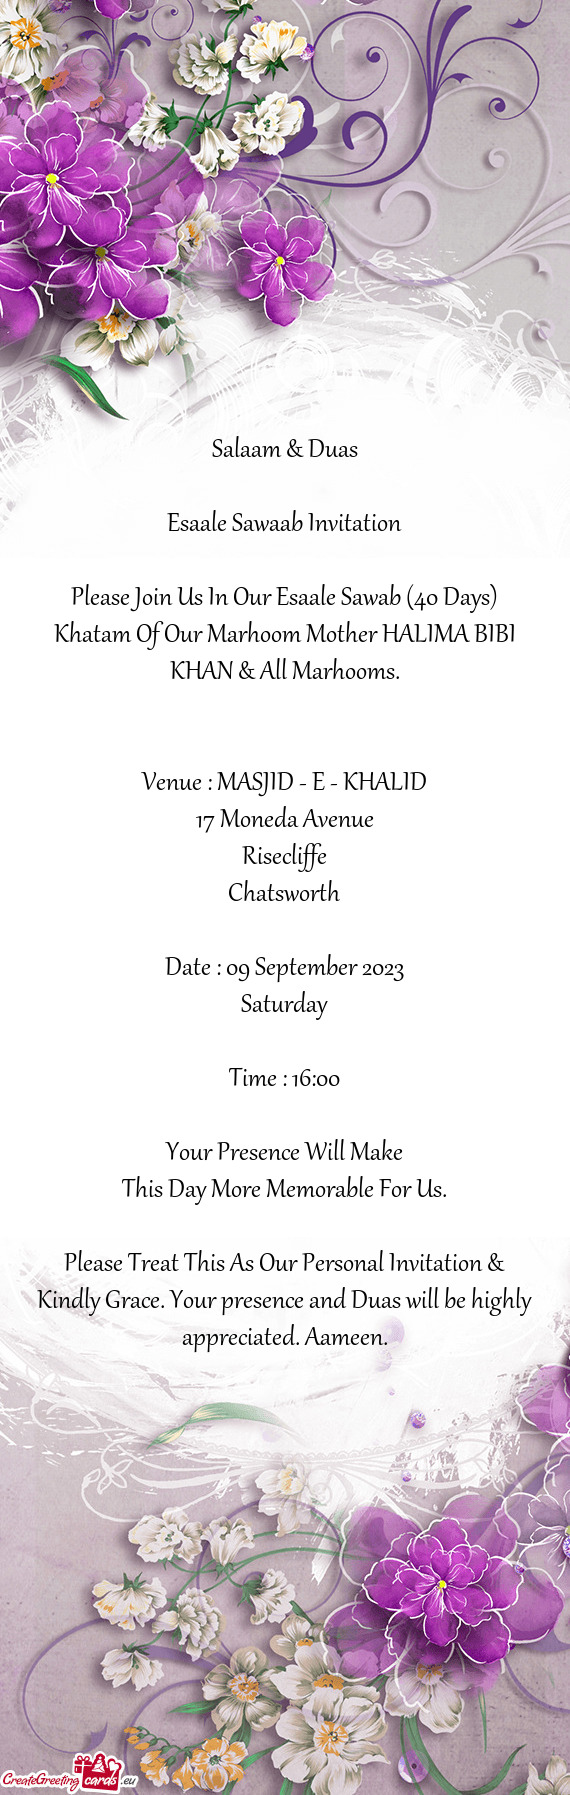 Please Join Us In Our Esaale Sawab (40 Days) Khatam Of Our Marhoom Mother HALIMA BIBI KHAN & All Mar